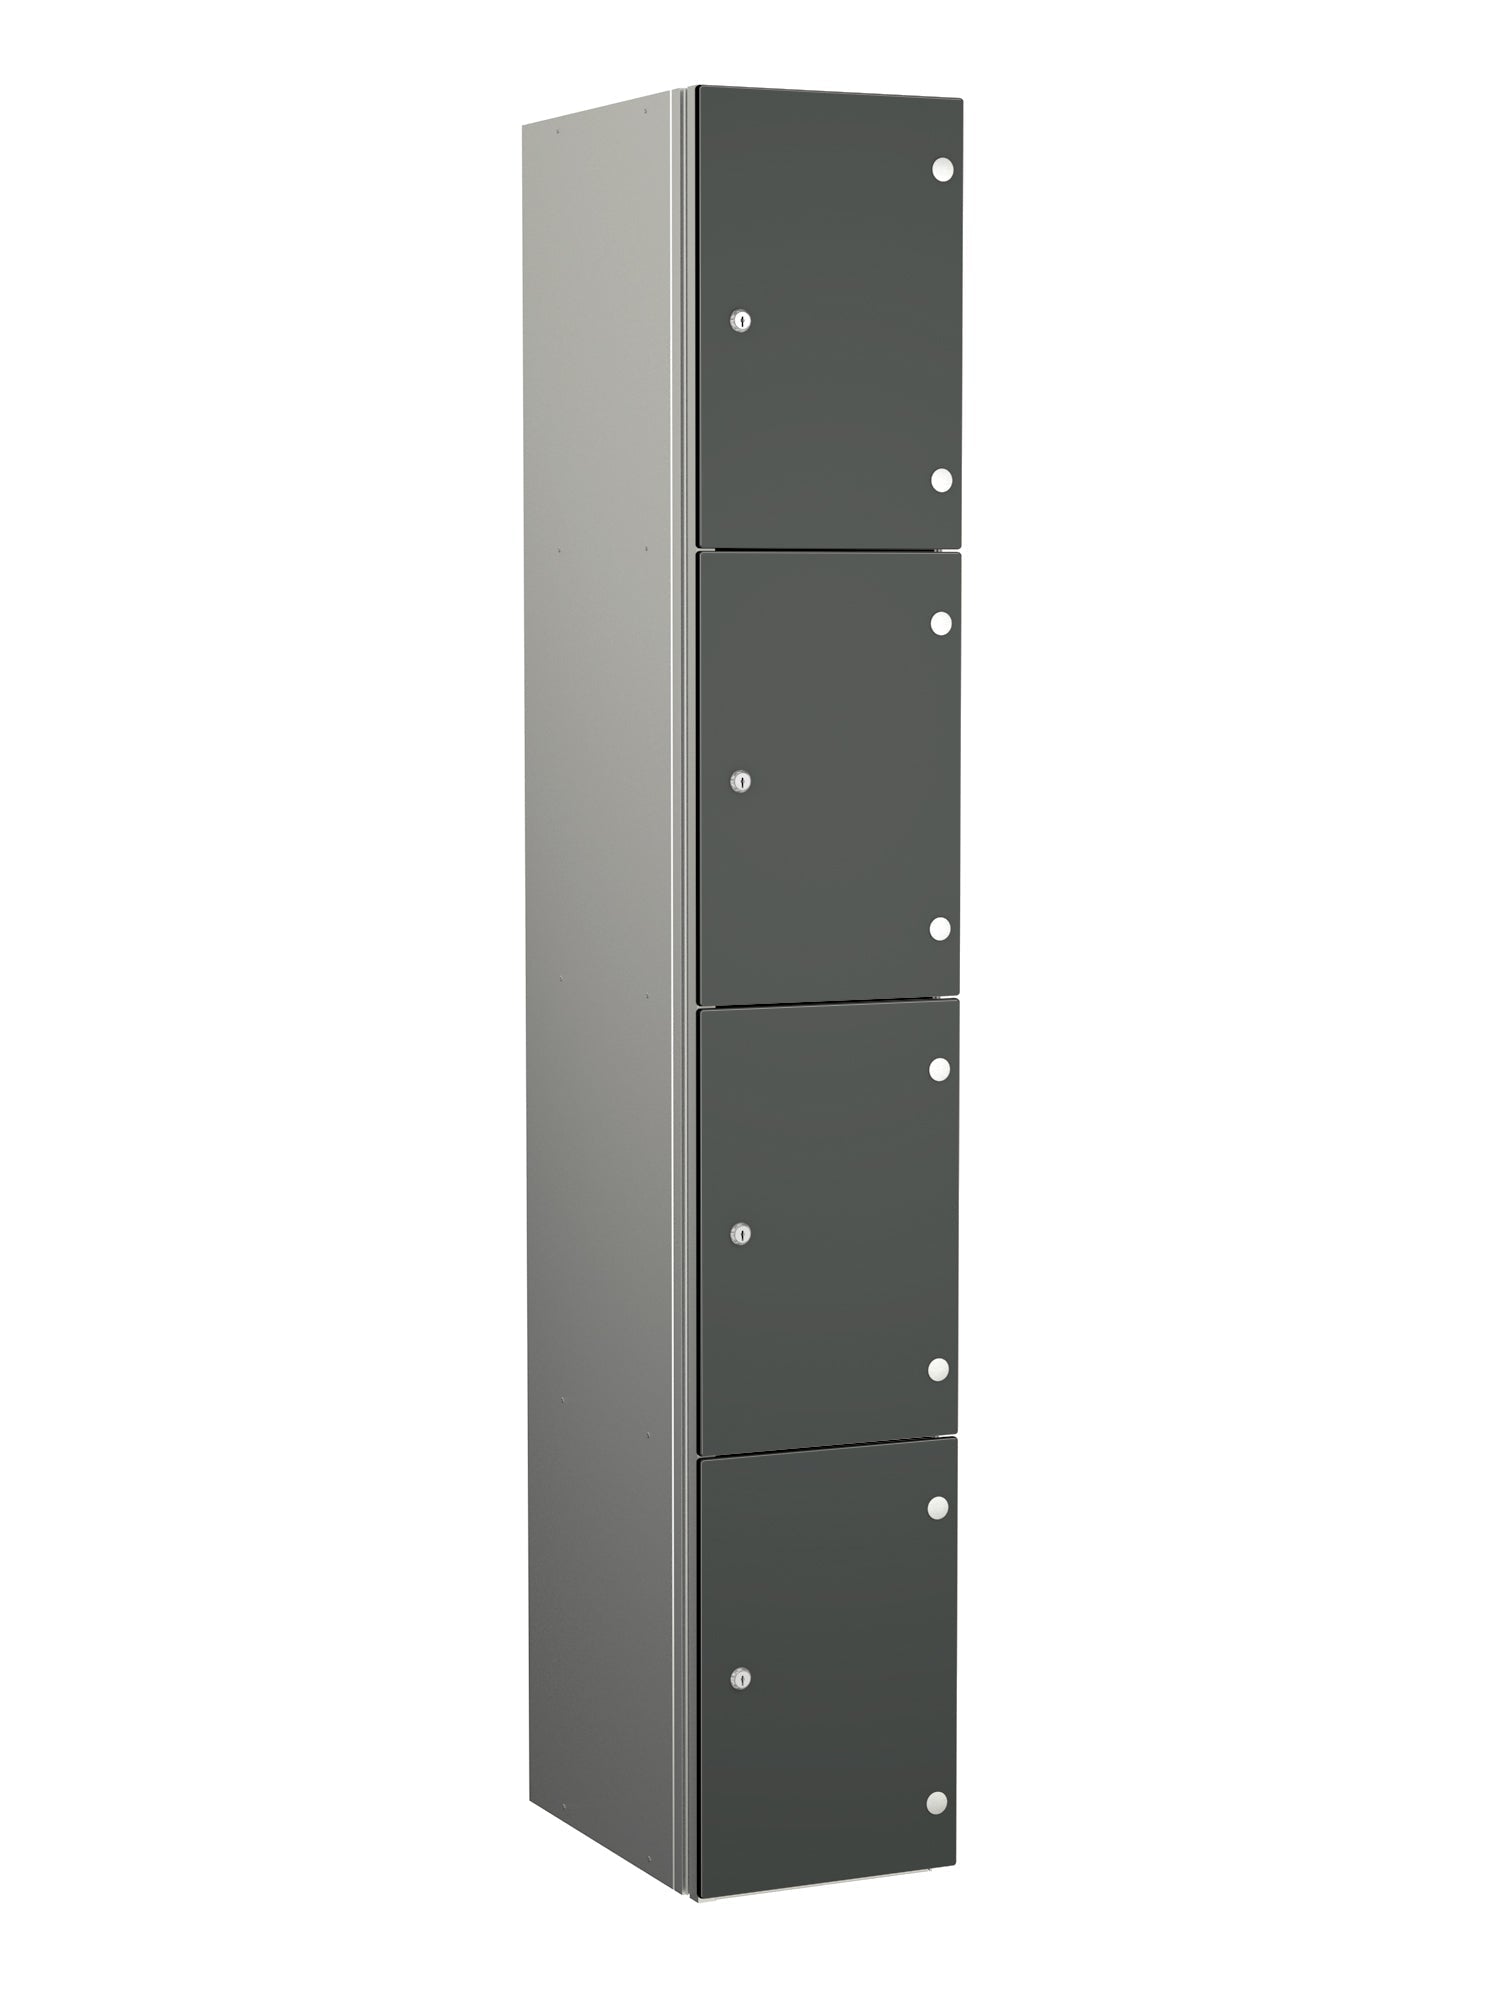 ZENBOX WET AREA LOCKERS WITH SGL DOORS - DARK GREY 4 DOOR Storage Lockers > Lockers > Cabinets > Storage > Probe > One Stop For Safety   